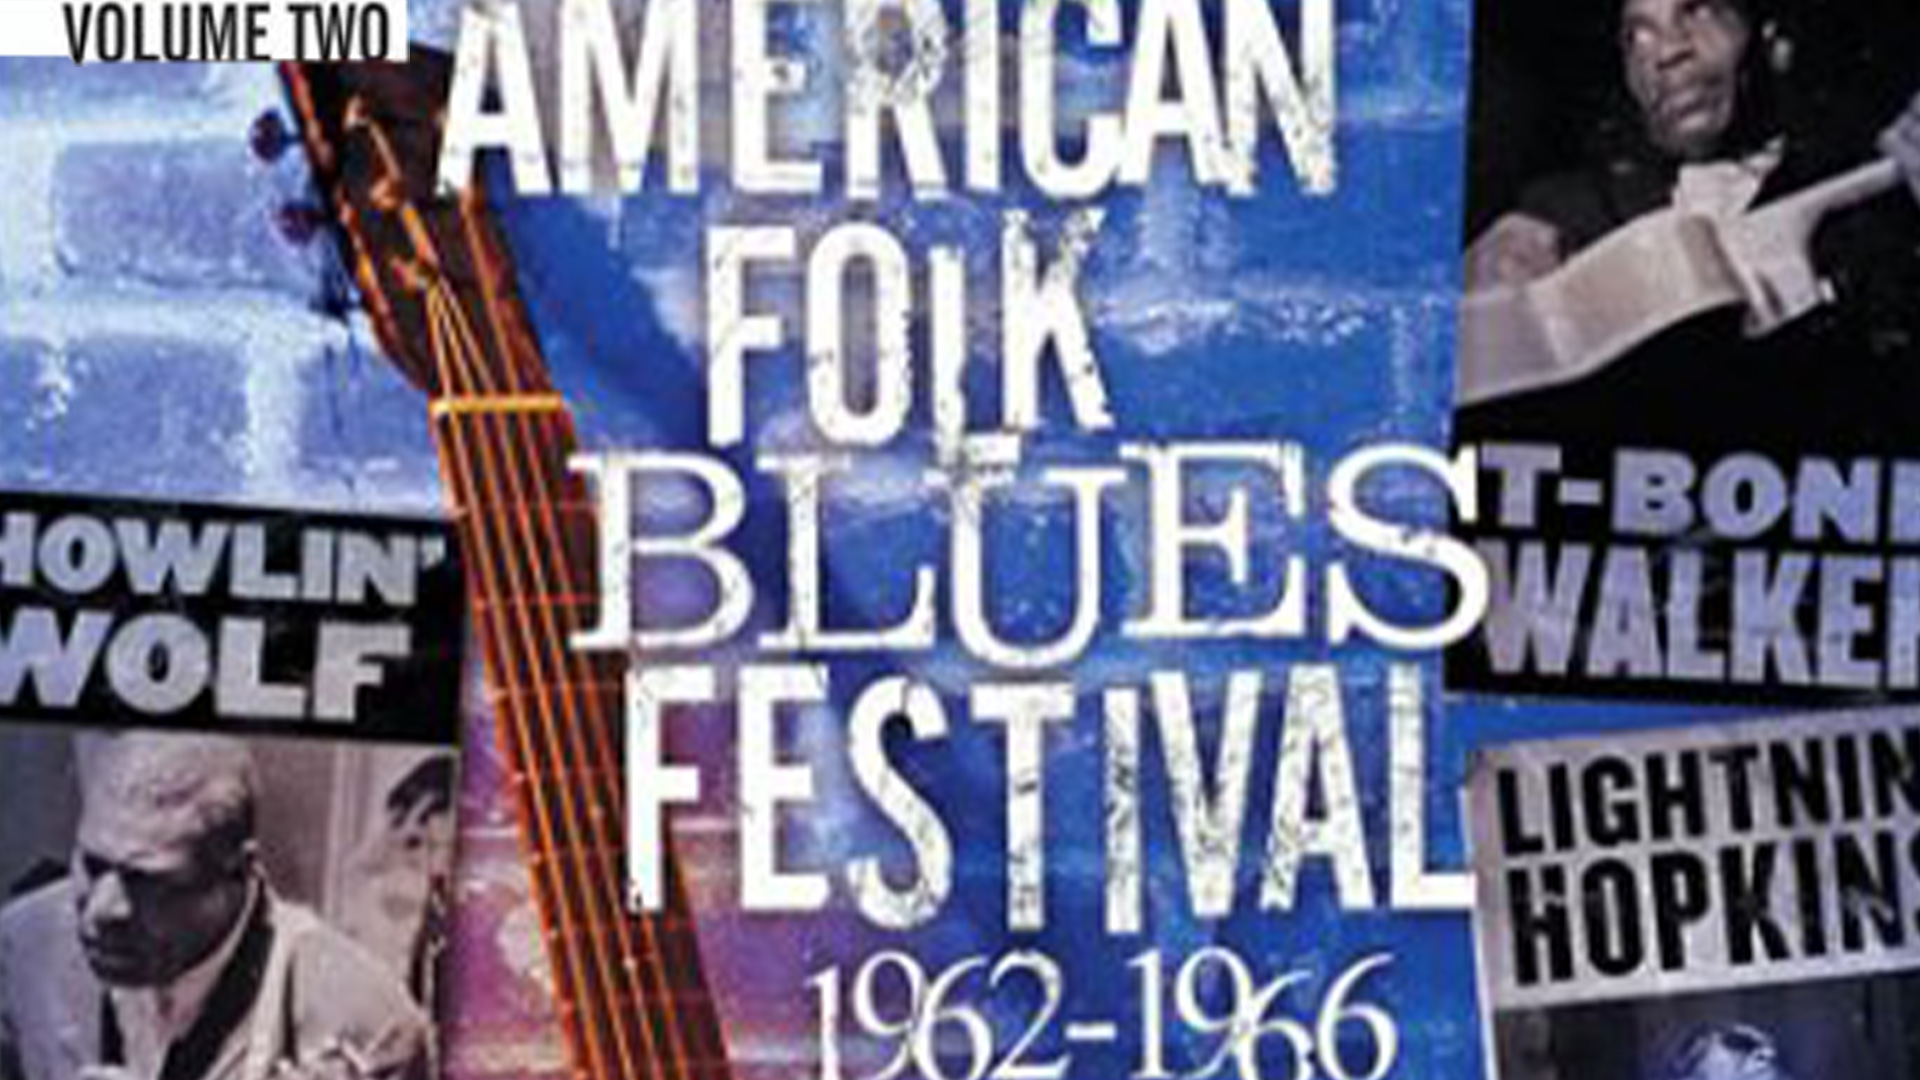 American Folk Blues Festival 1962-1966 Volume 2